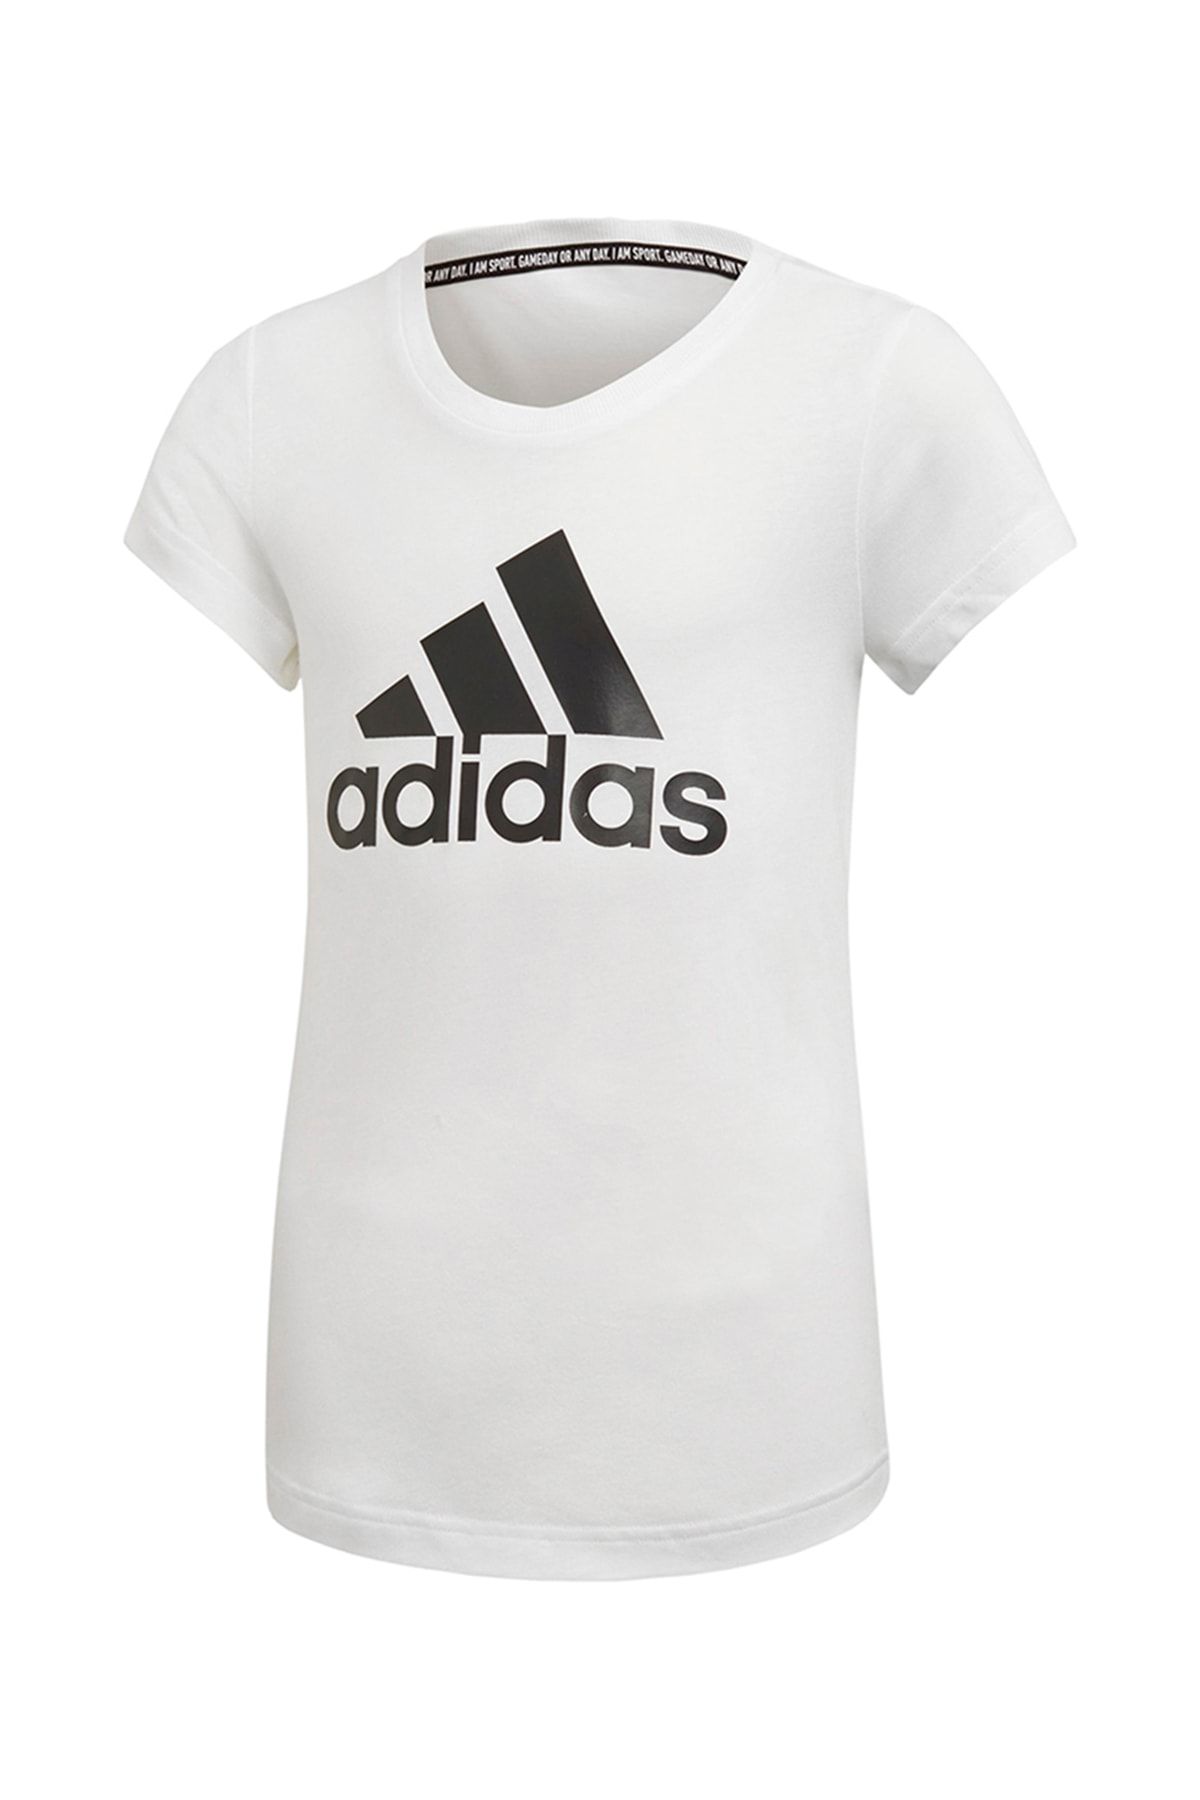 Футболка adidas tee. Adidas t Shirt. Adidas Essentials big logo. Белая футболка адидас мужская. Германская футболка адидас мужская.